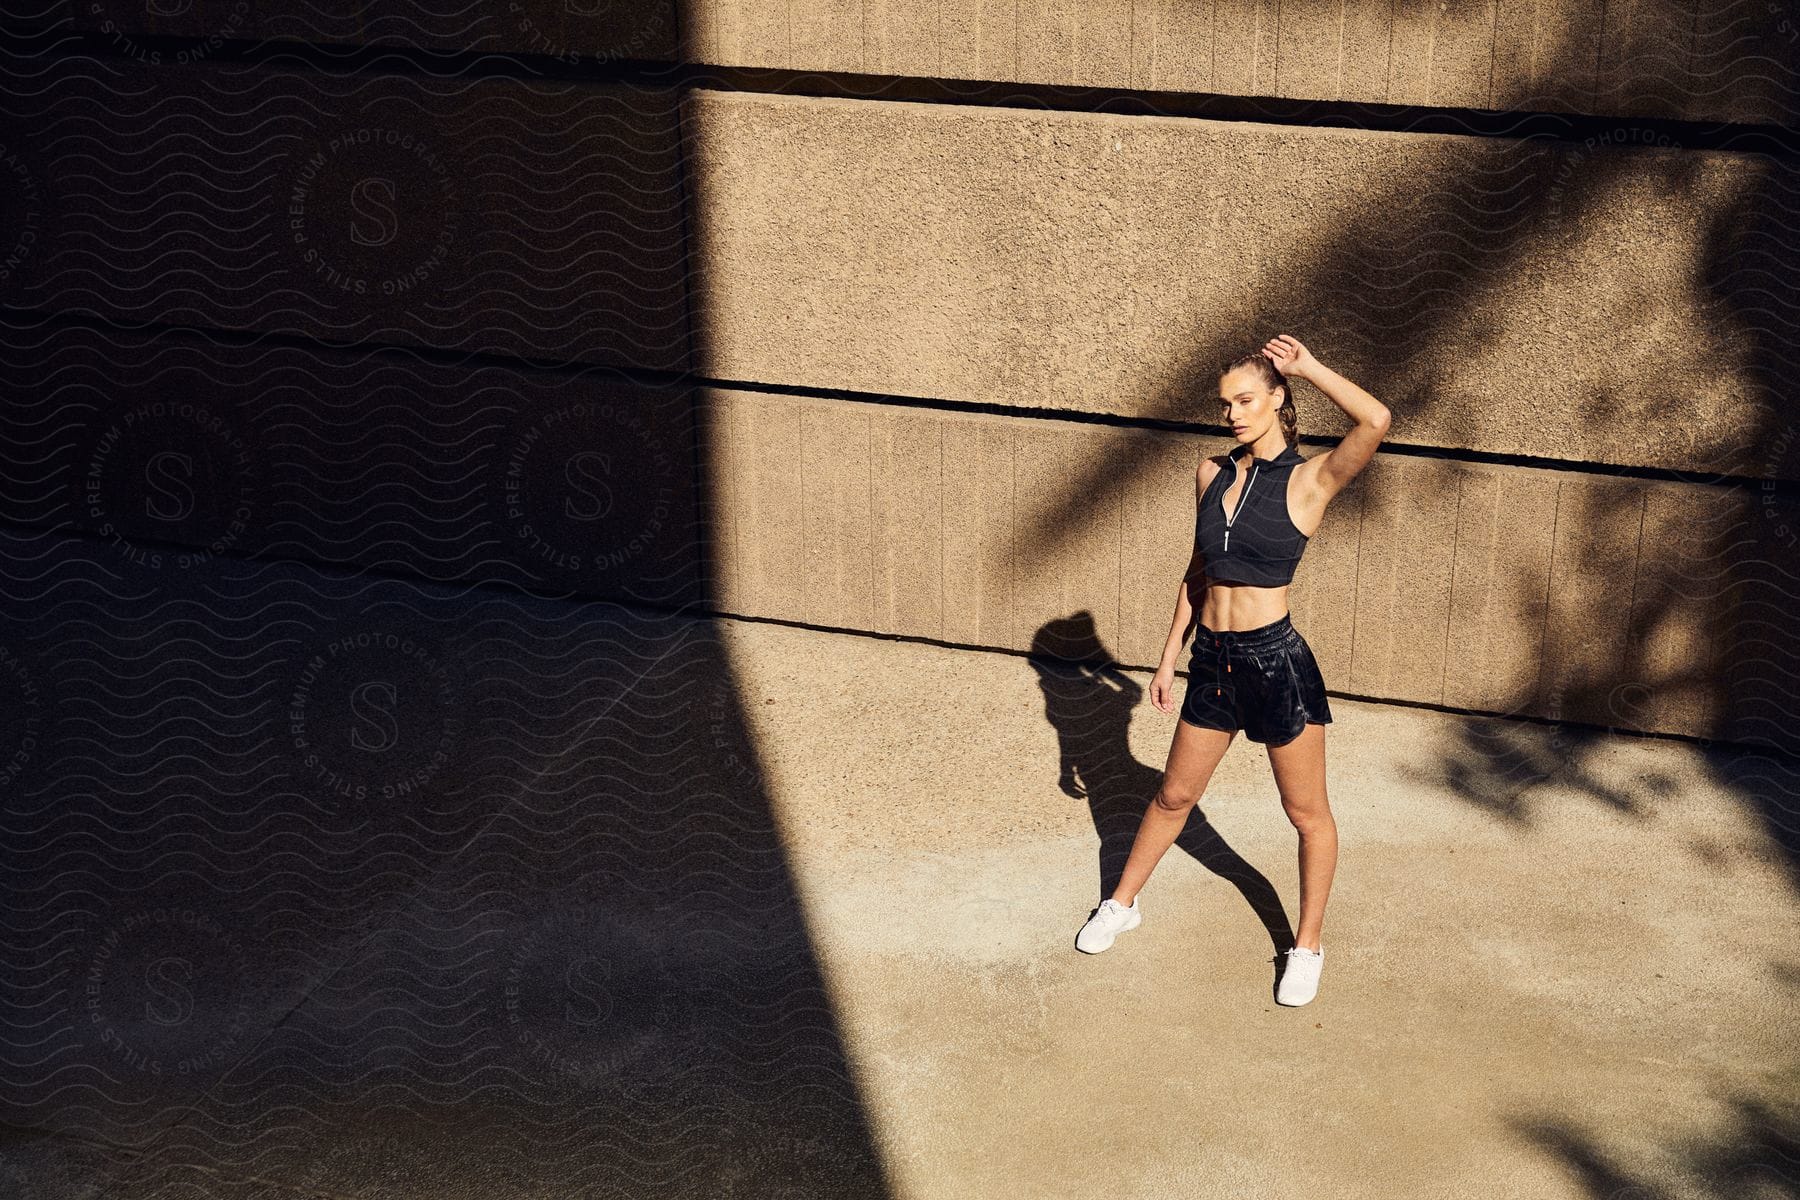 A female model posing on a city sidewalk wearing shorts